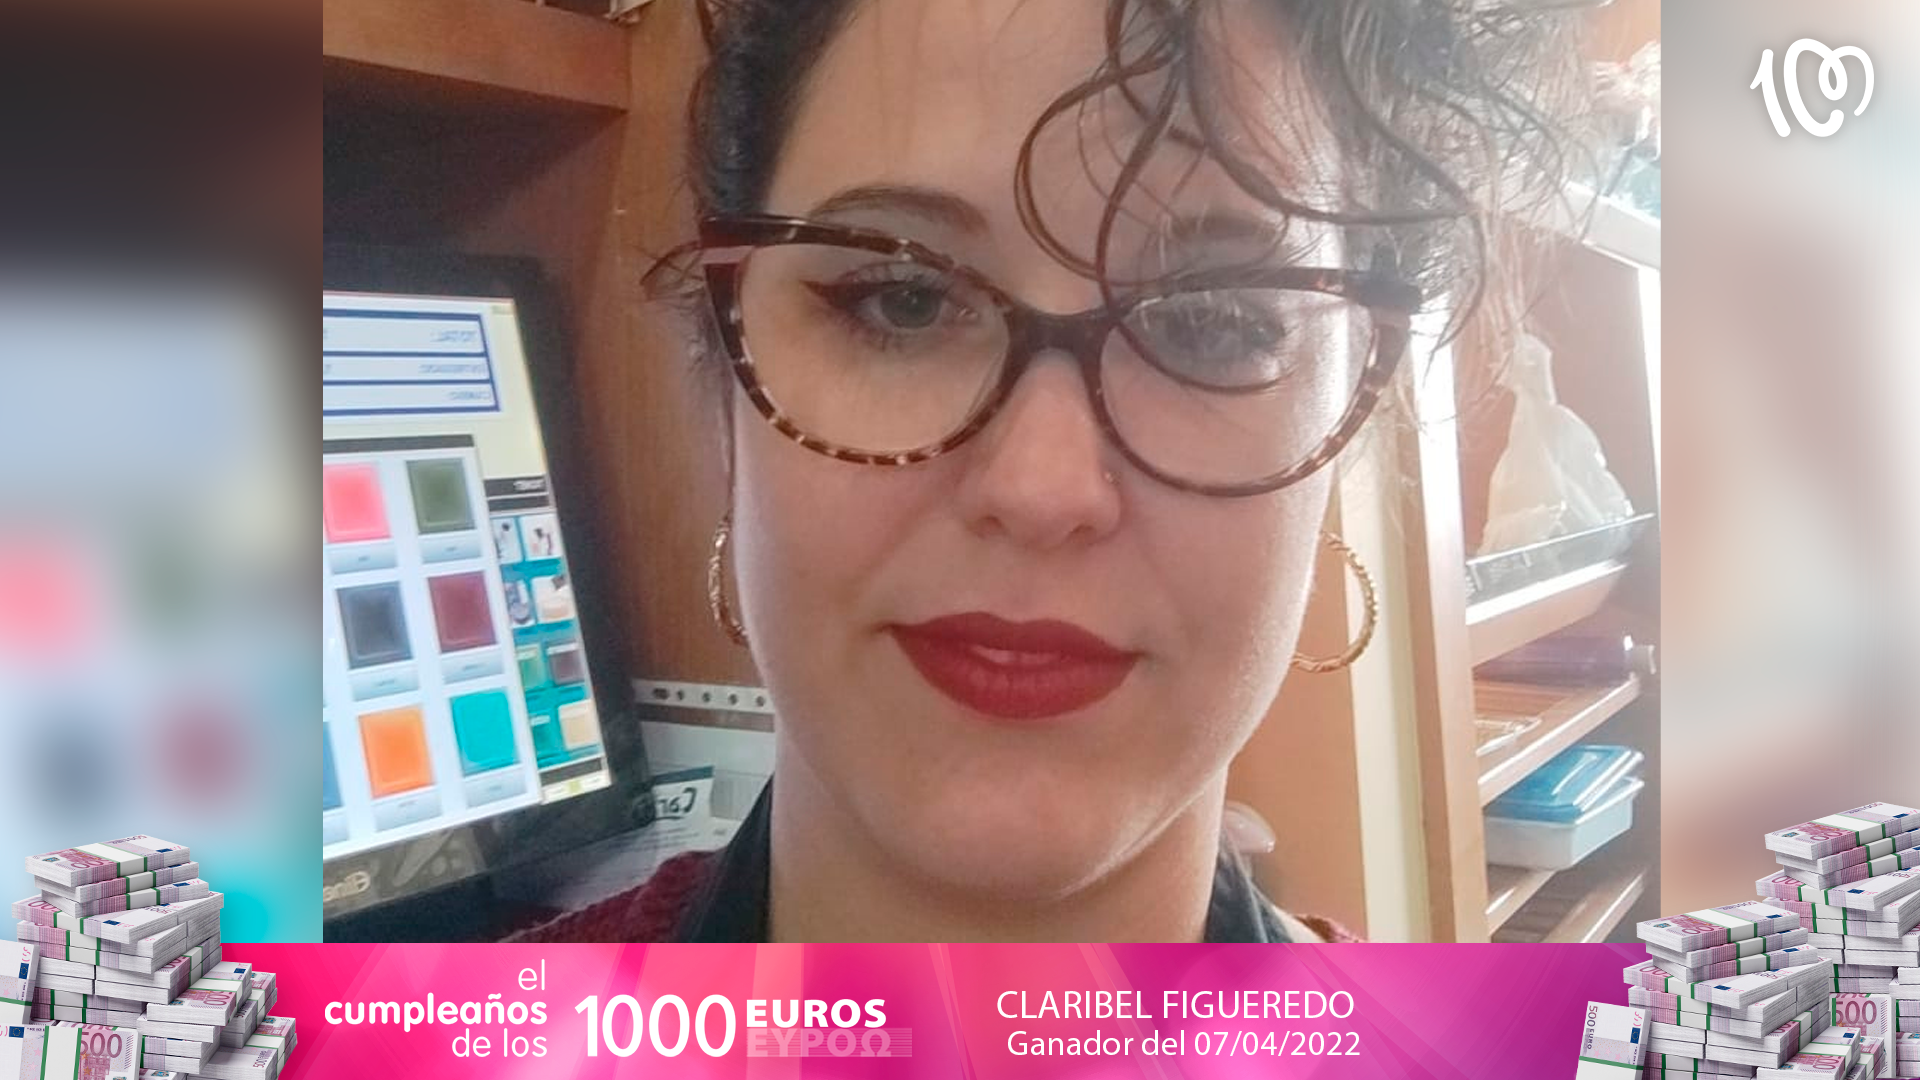 Claribel Figueredo ha ganado 2.000 euros: "¡Impresionante! ¡Dos mil eurazos!"